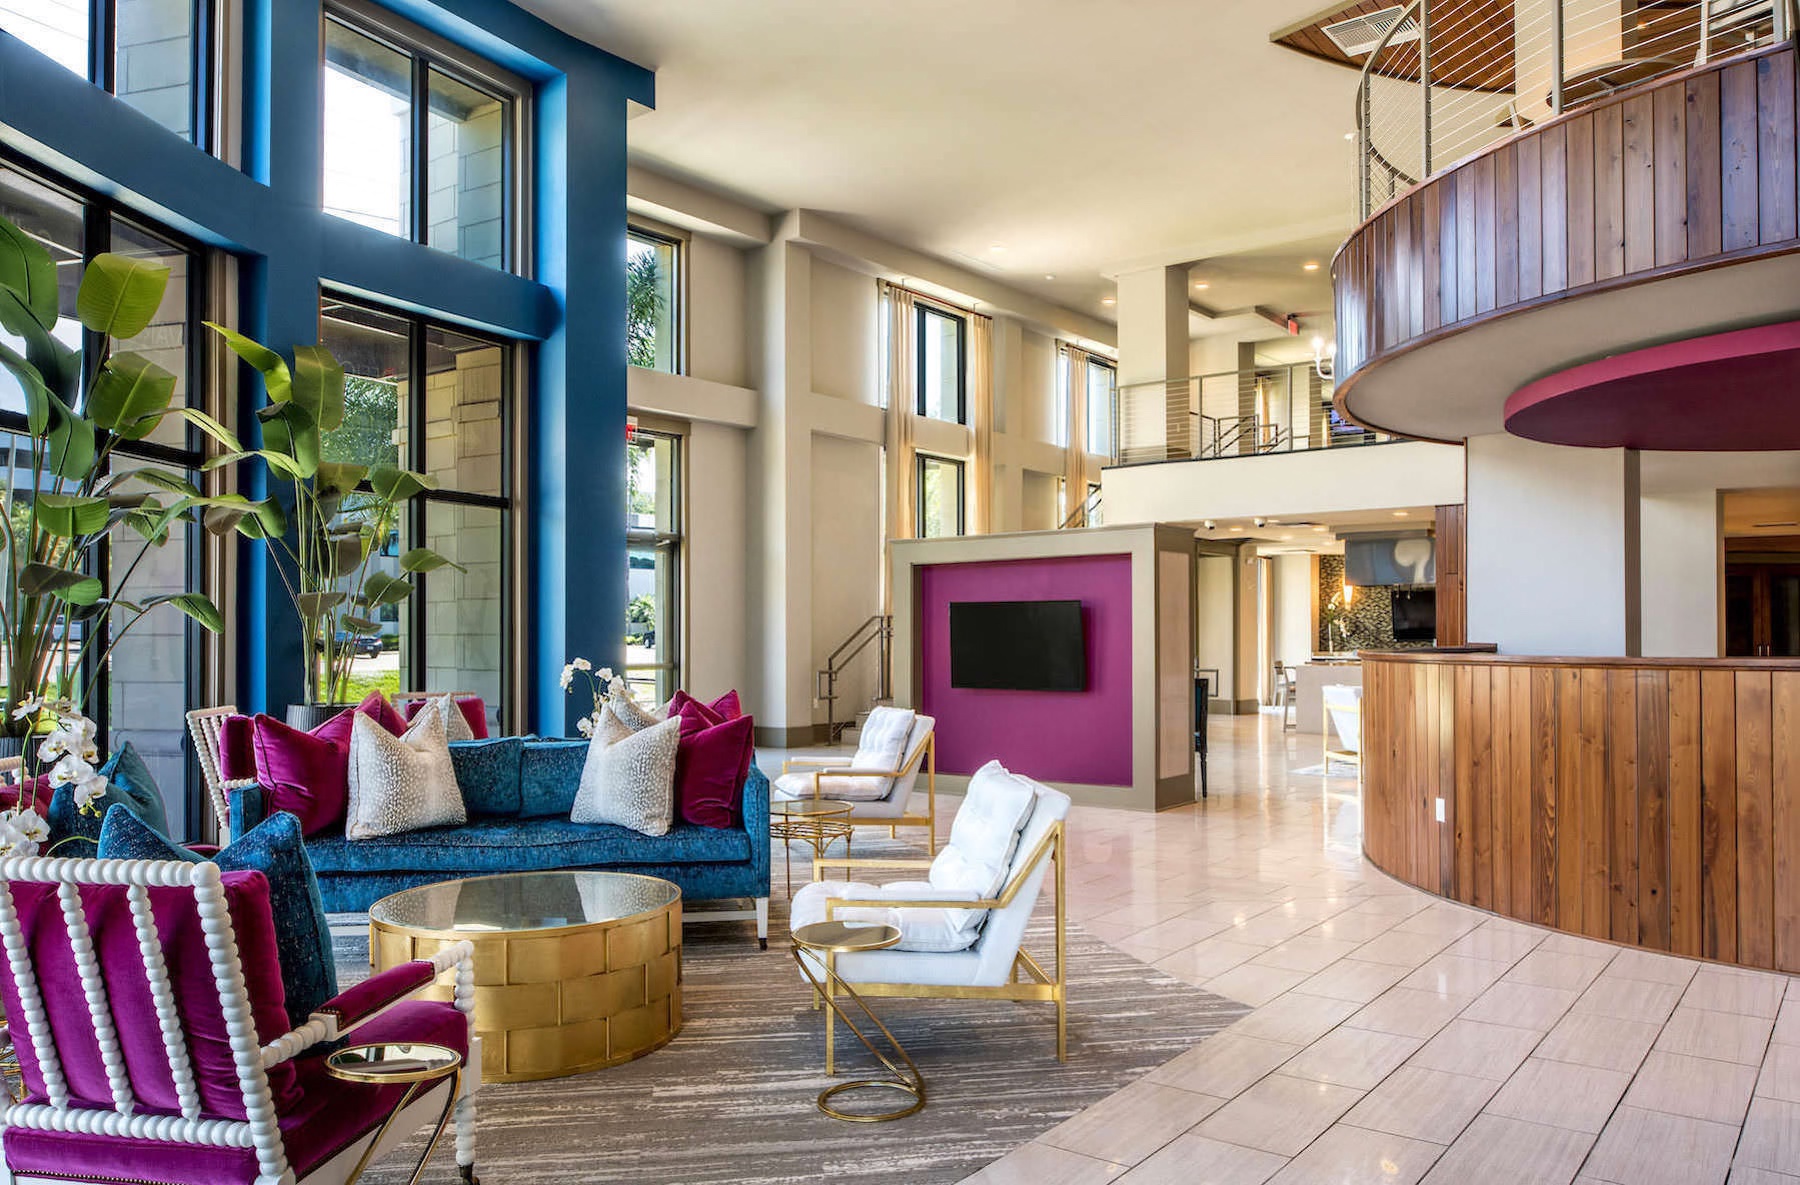 Varela Westshore Apartments a Northwood Ravin Signature Community